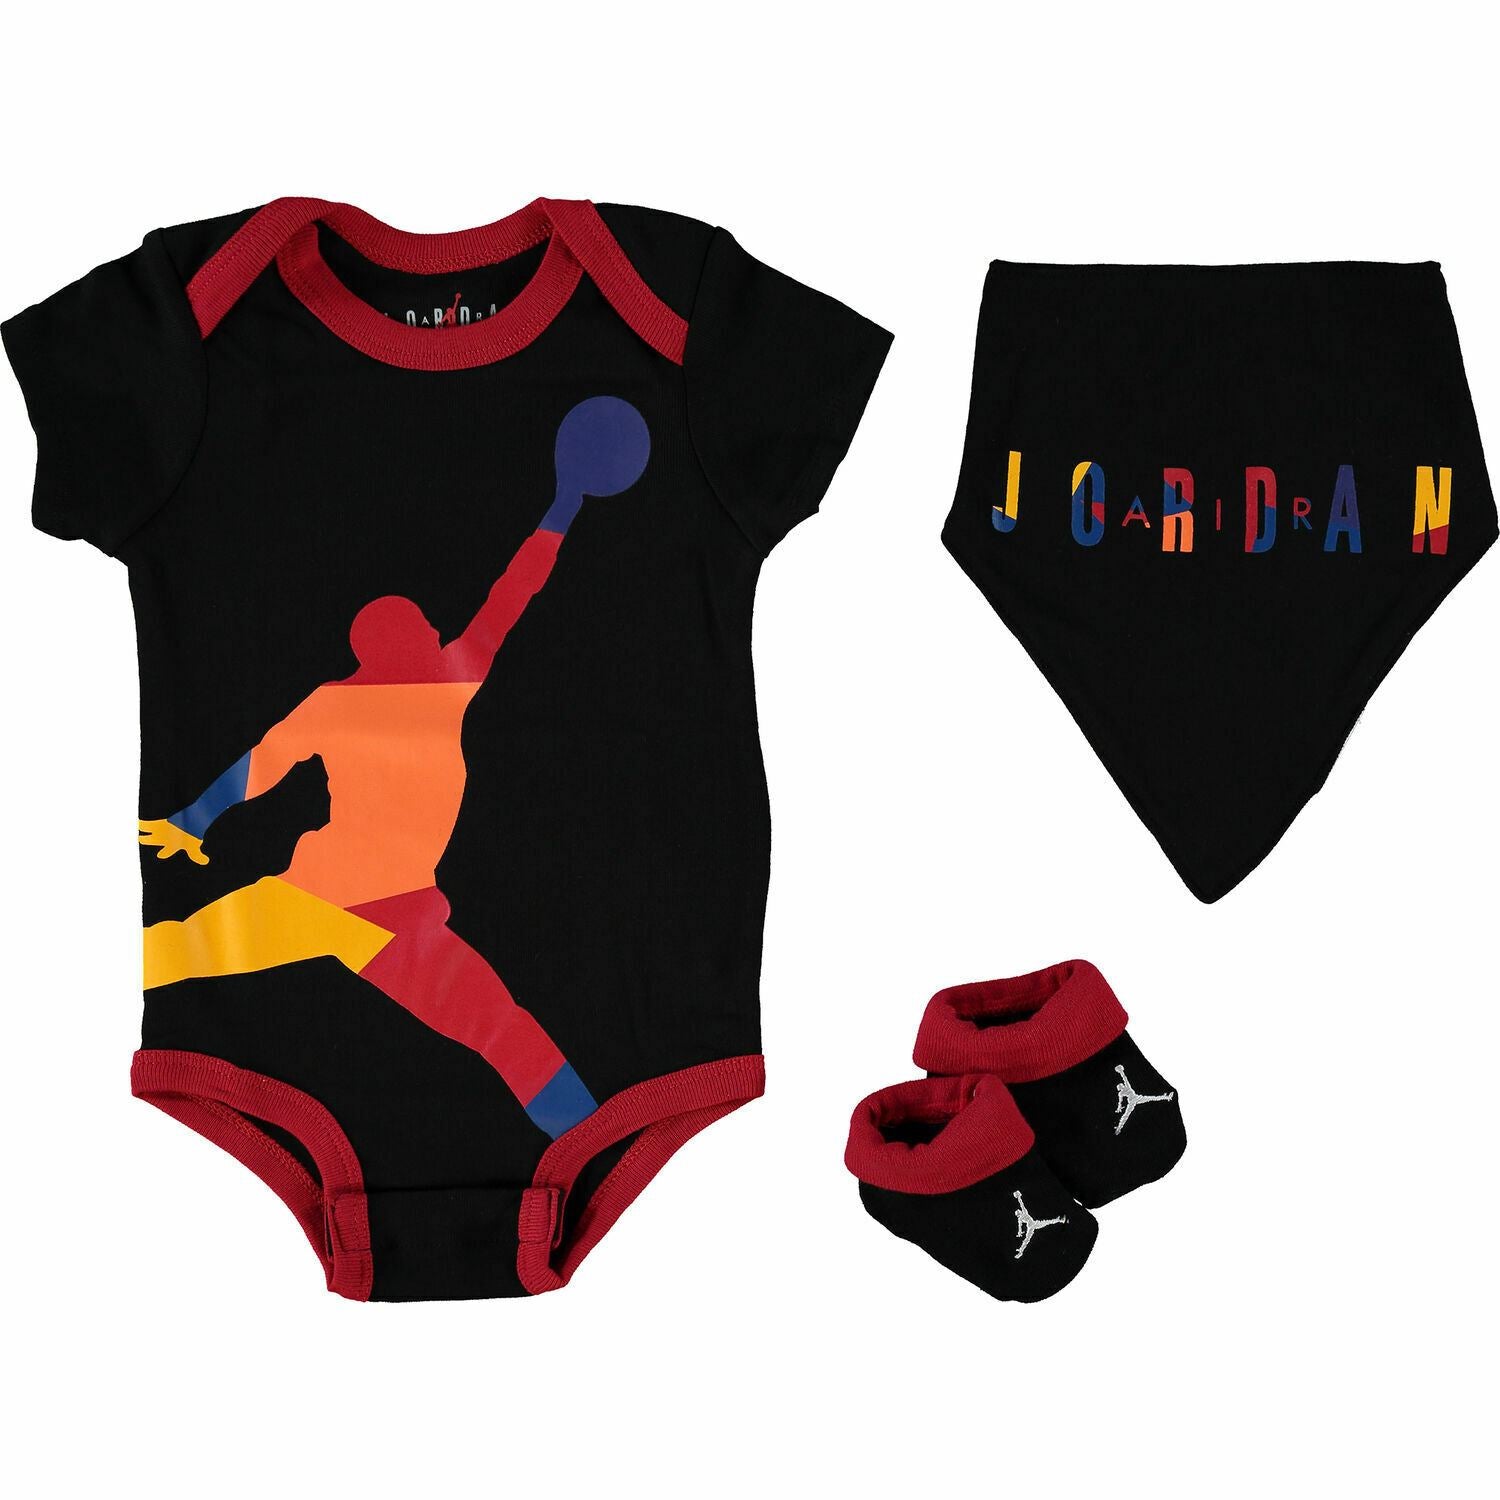 Nike AIR JORDAN - Baby Boys' 3-piece Outfit Gift Set, Black/Multi, 6-12 months